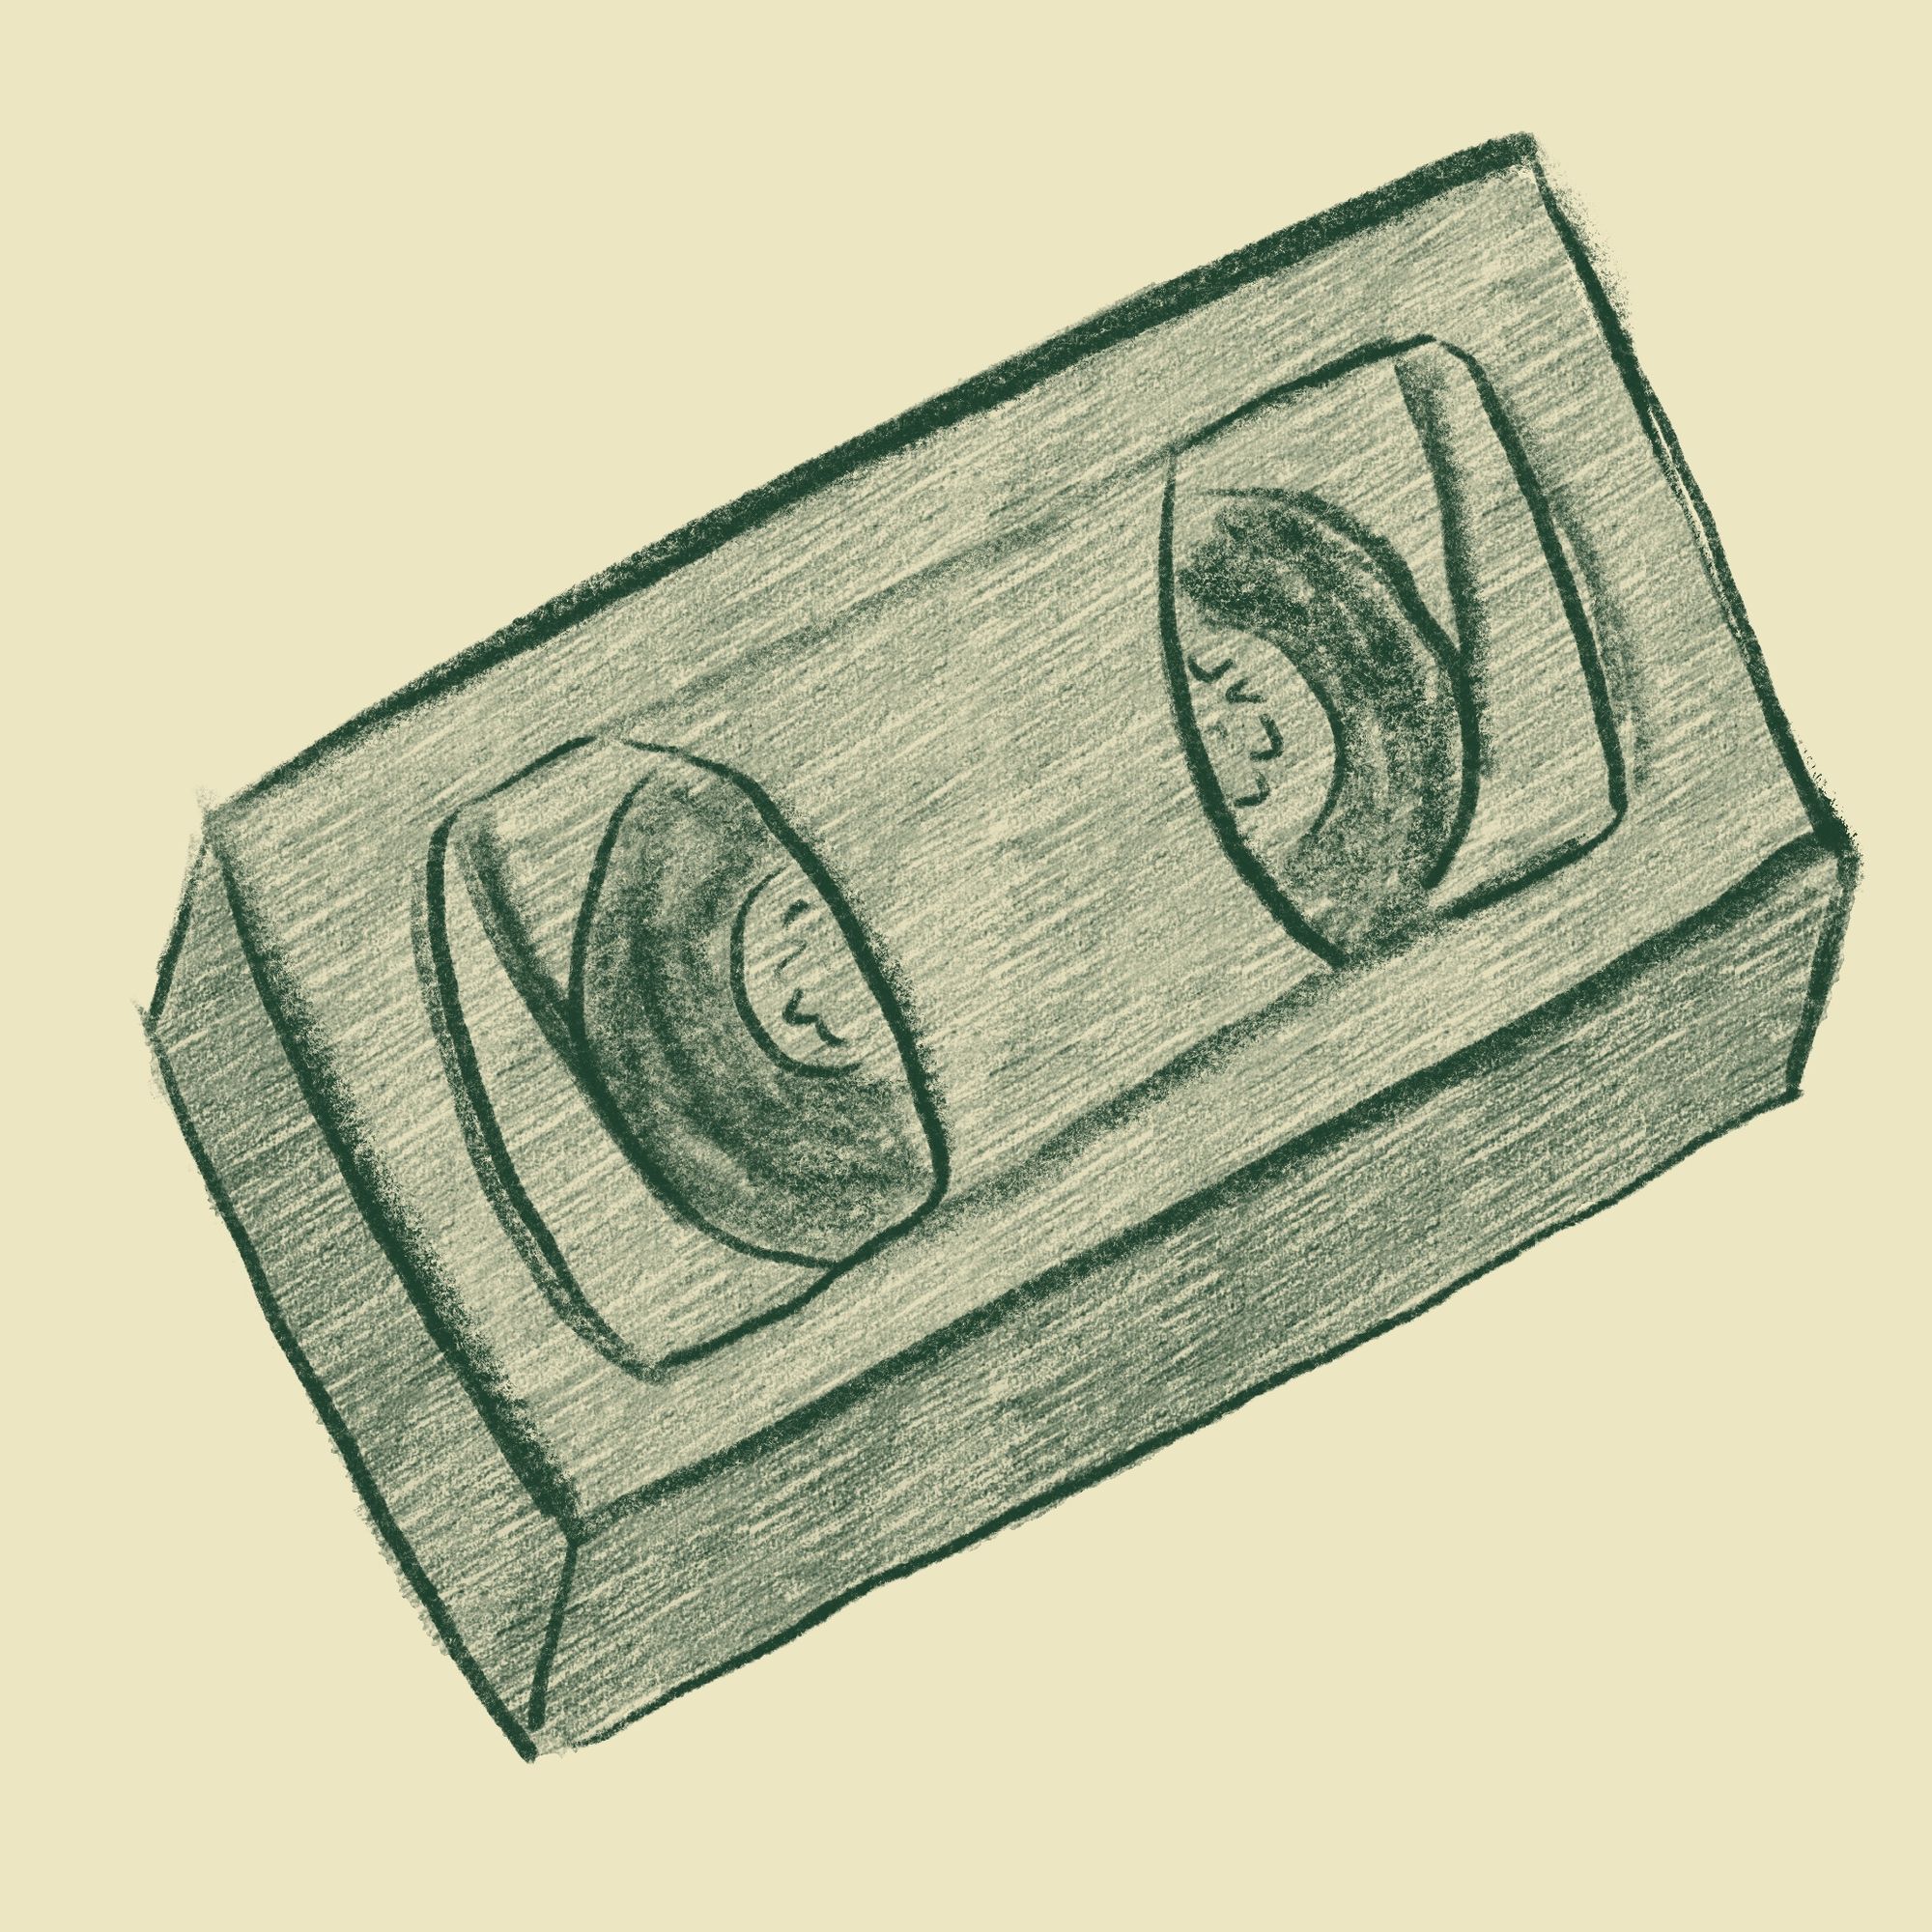 a digital sketch of a VHS tape